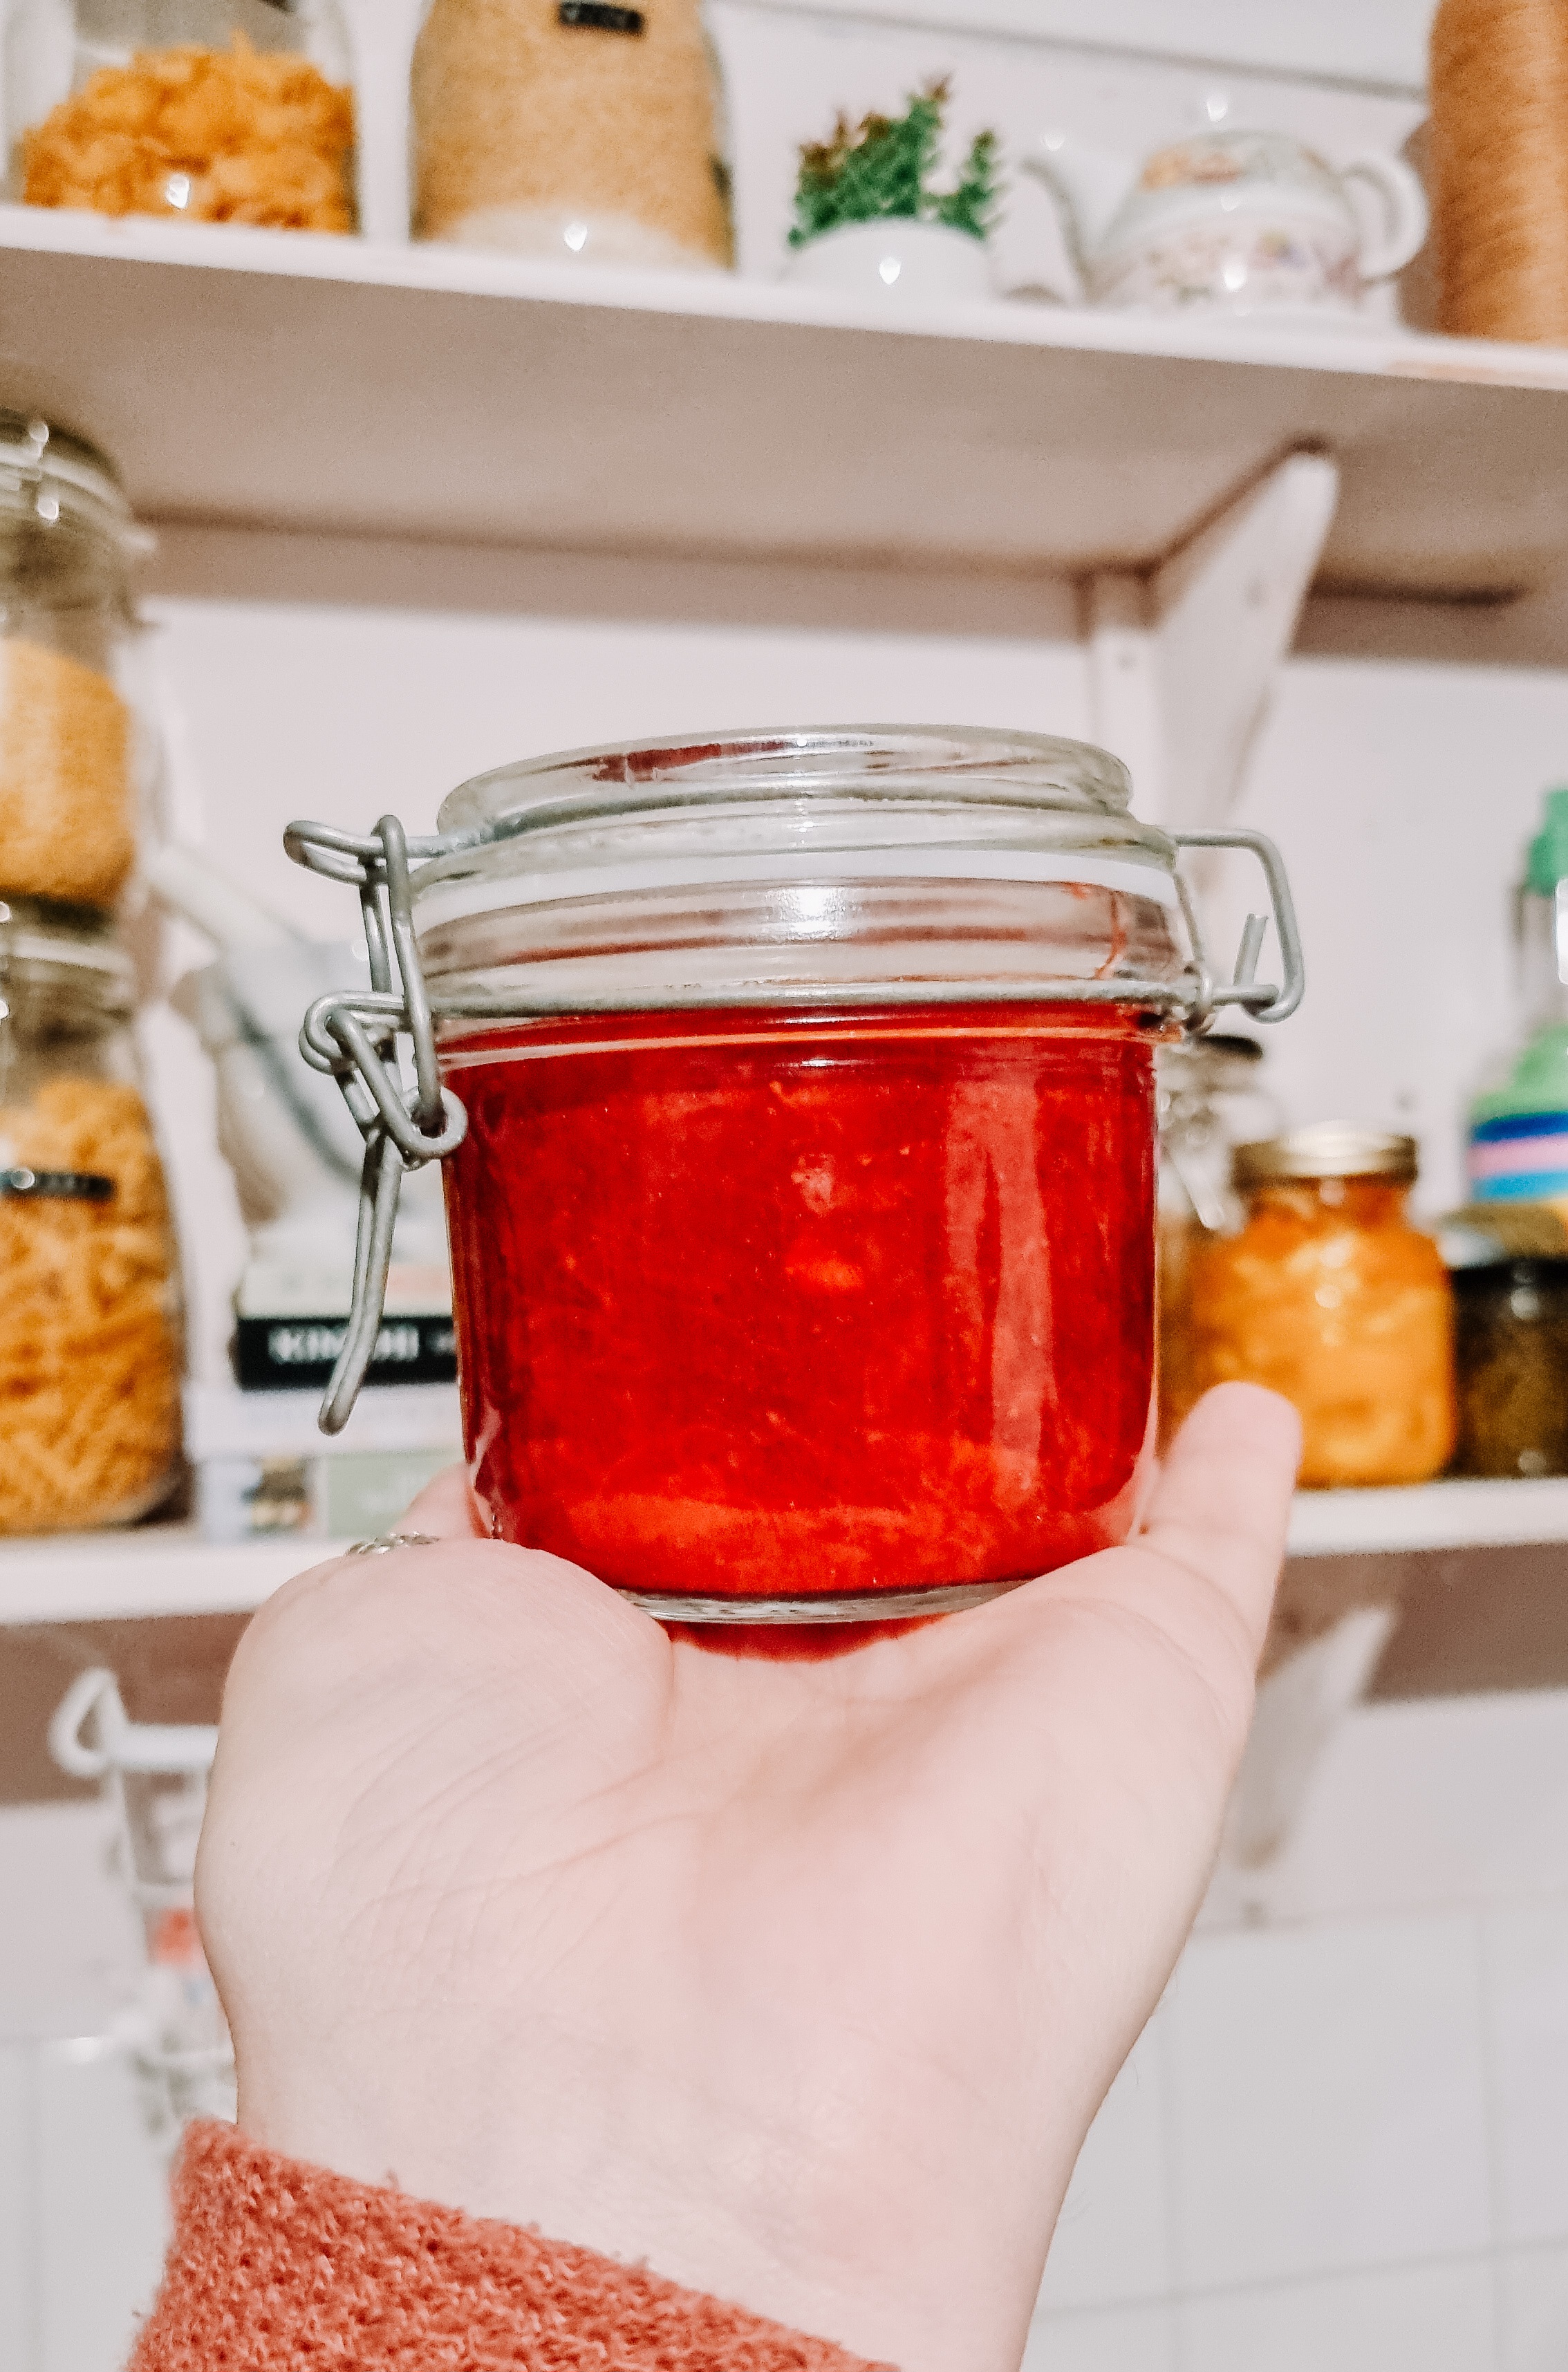 pectin free strawberry jam in a jar